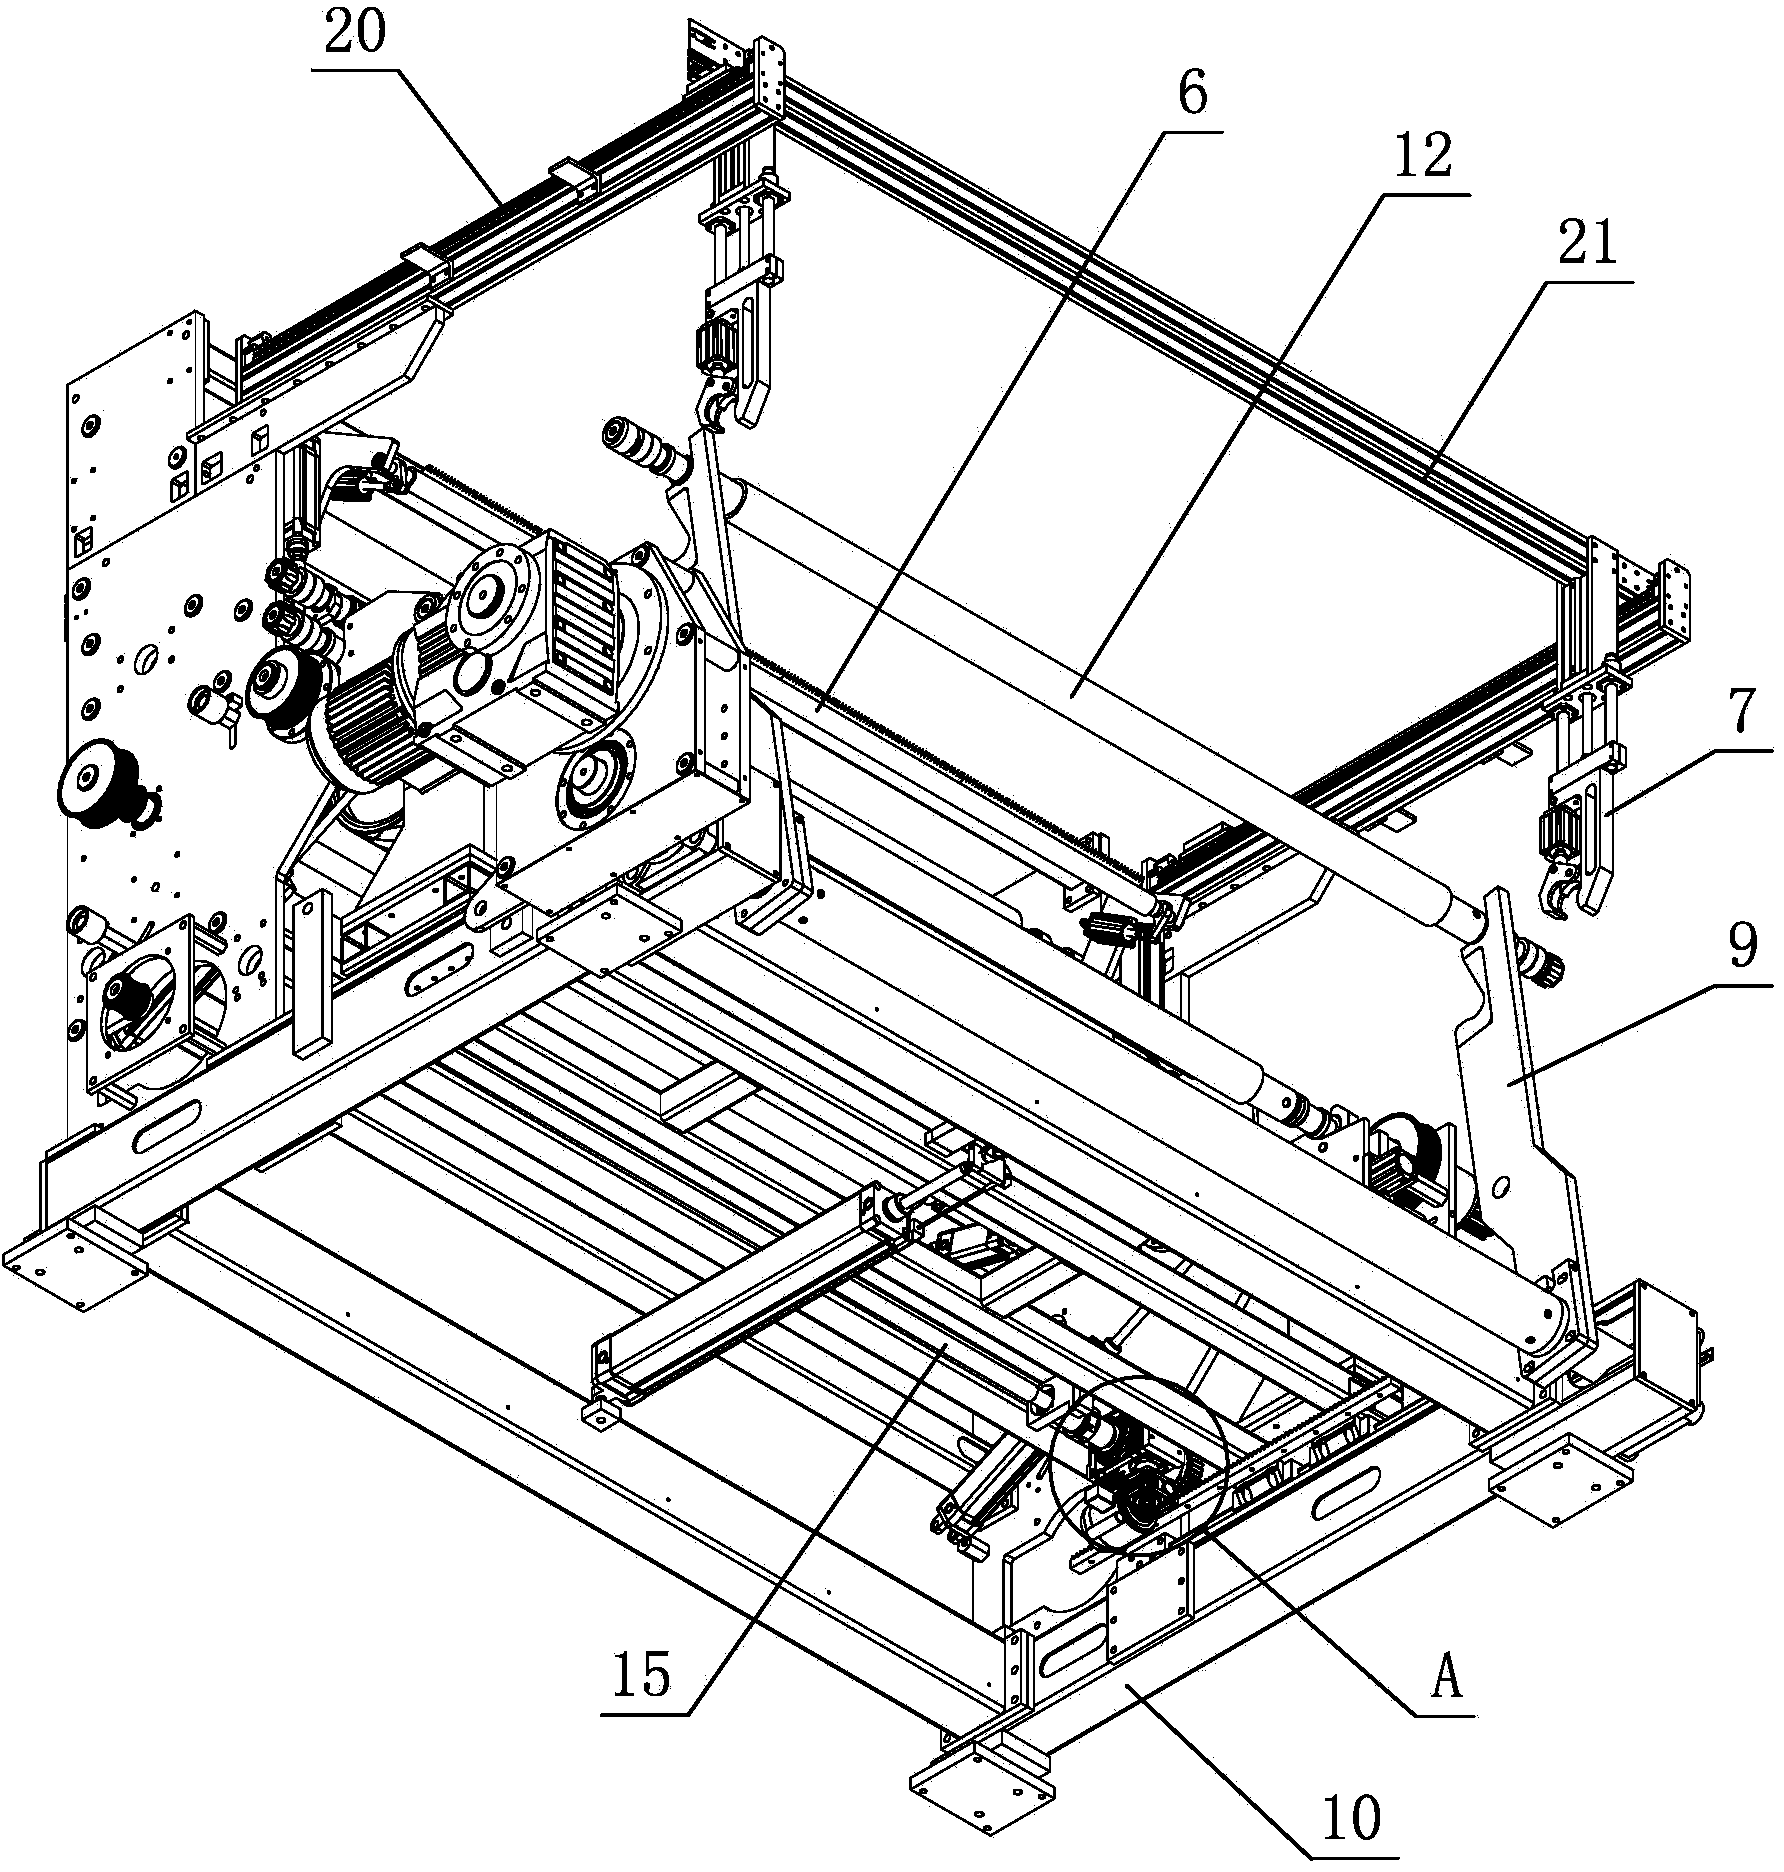 Thin film center and surface winding machine